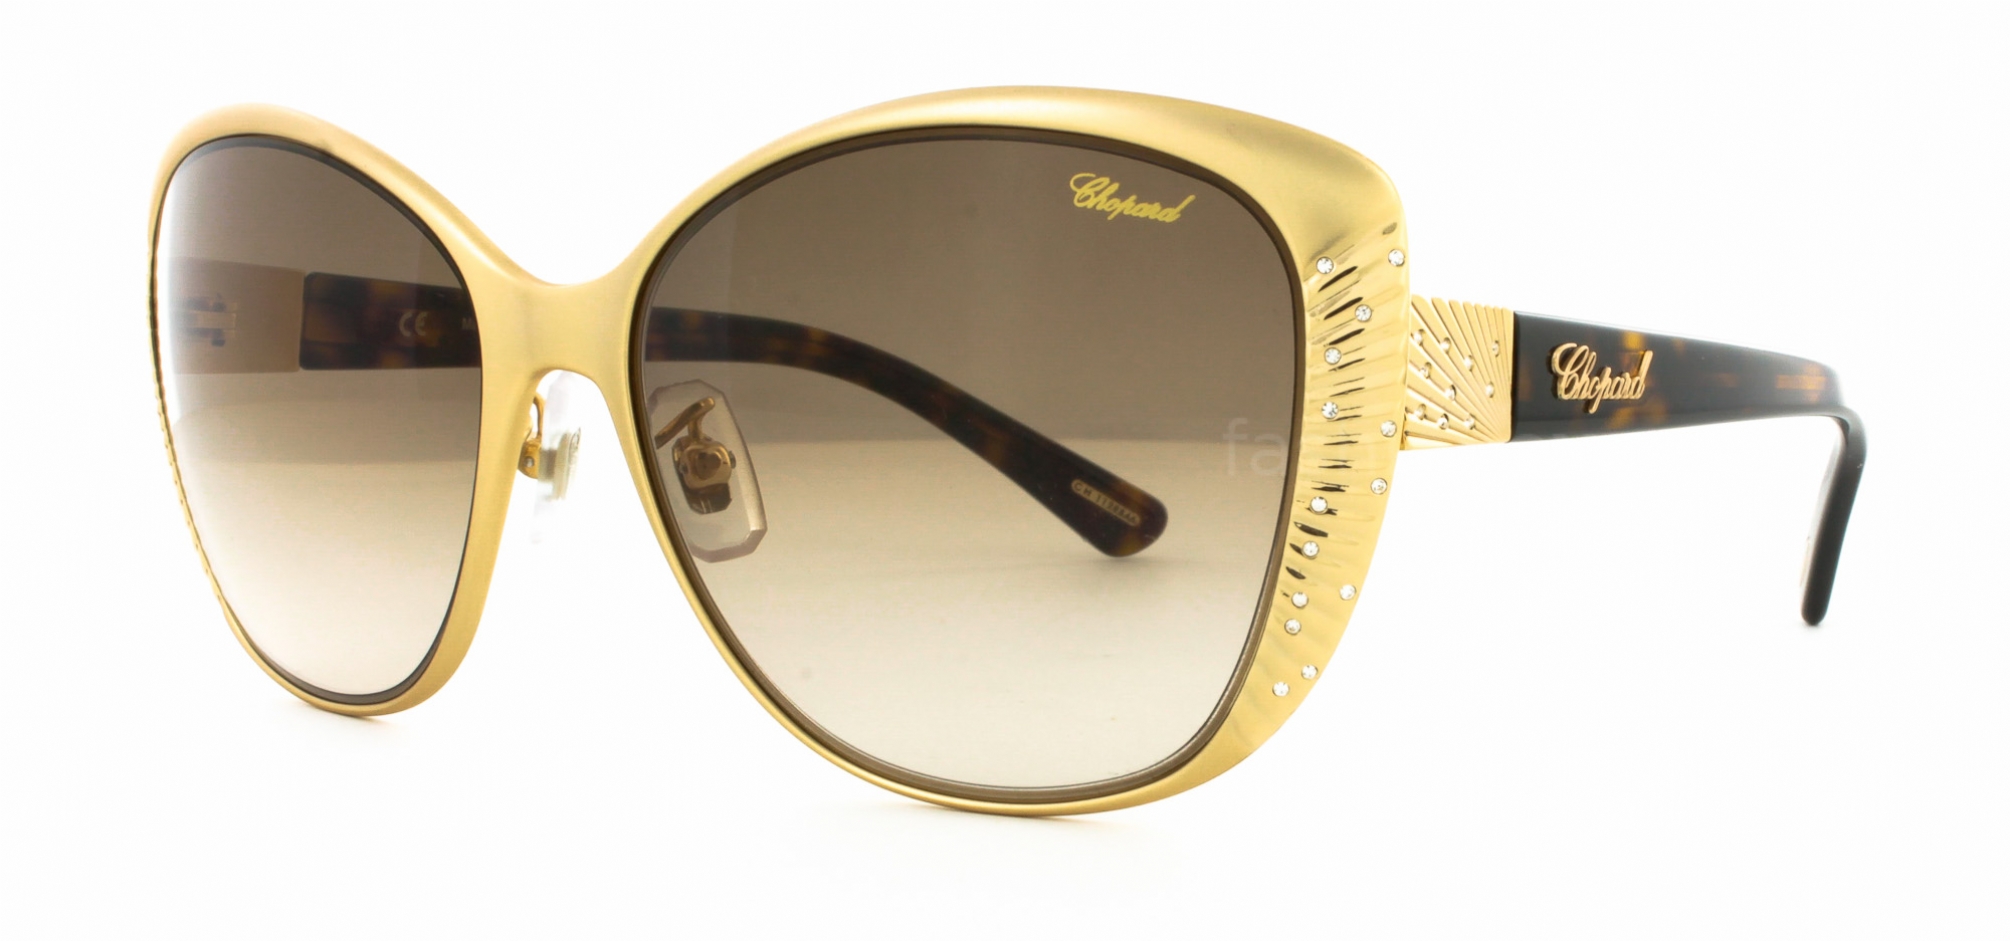 Buy Chopard Sunglasses directly from EyeglassesDepot.com